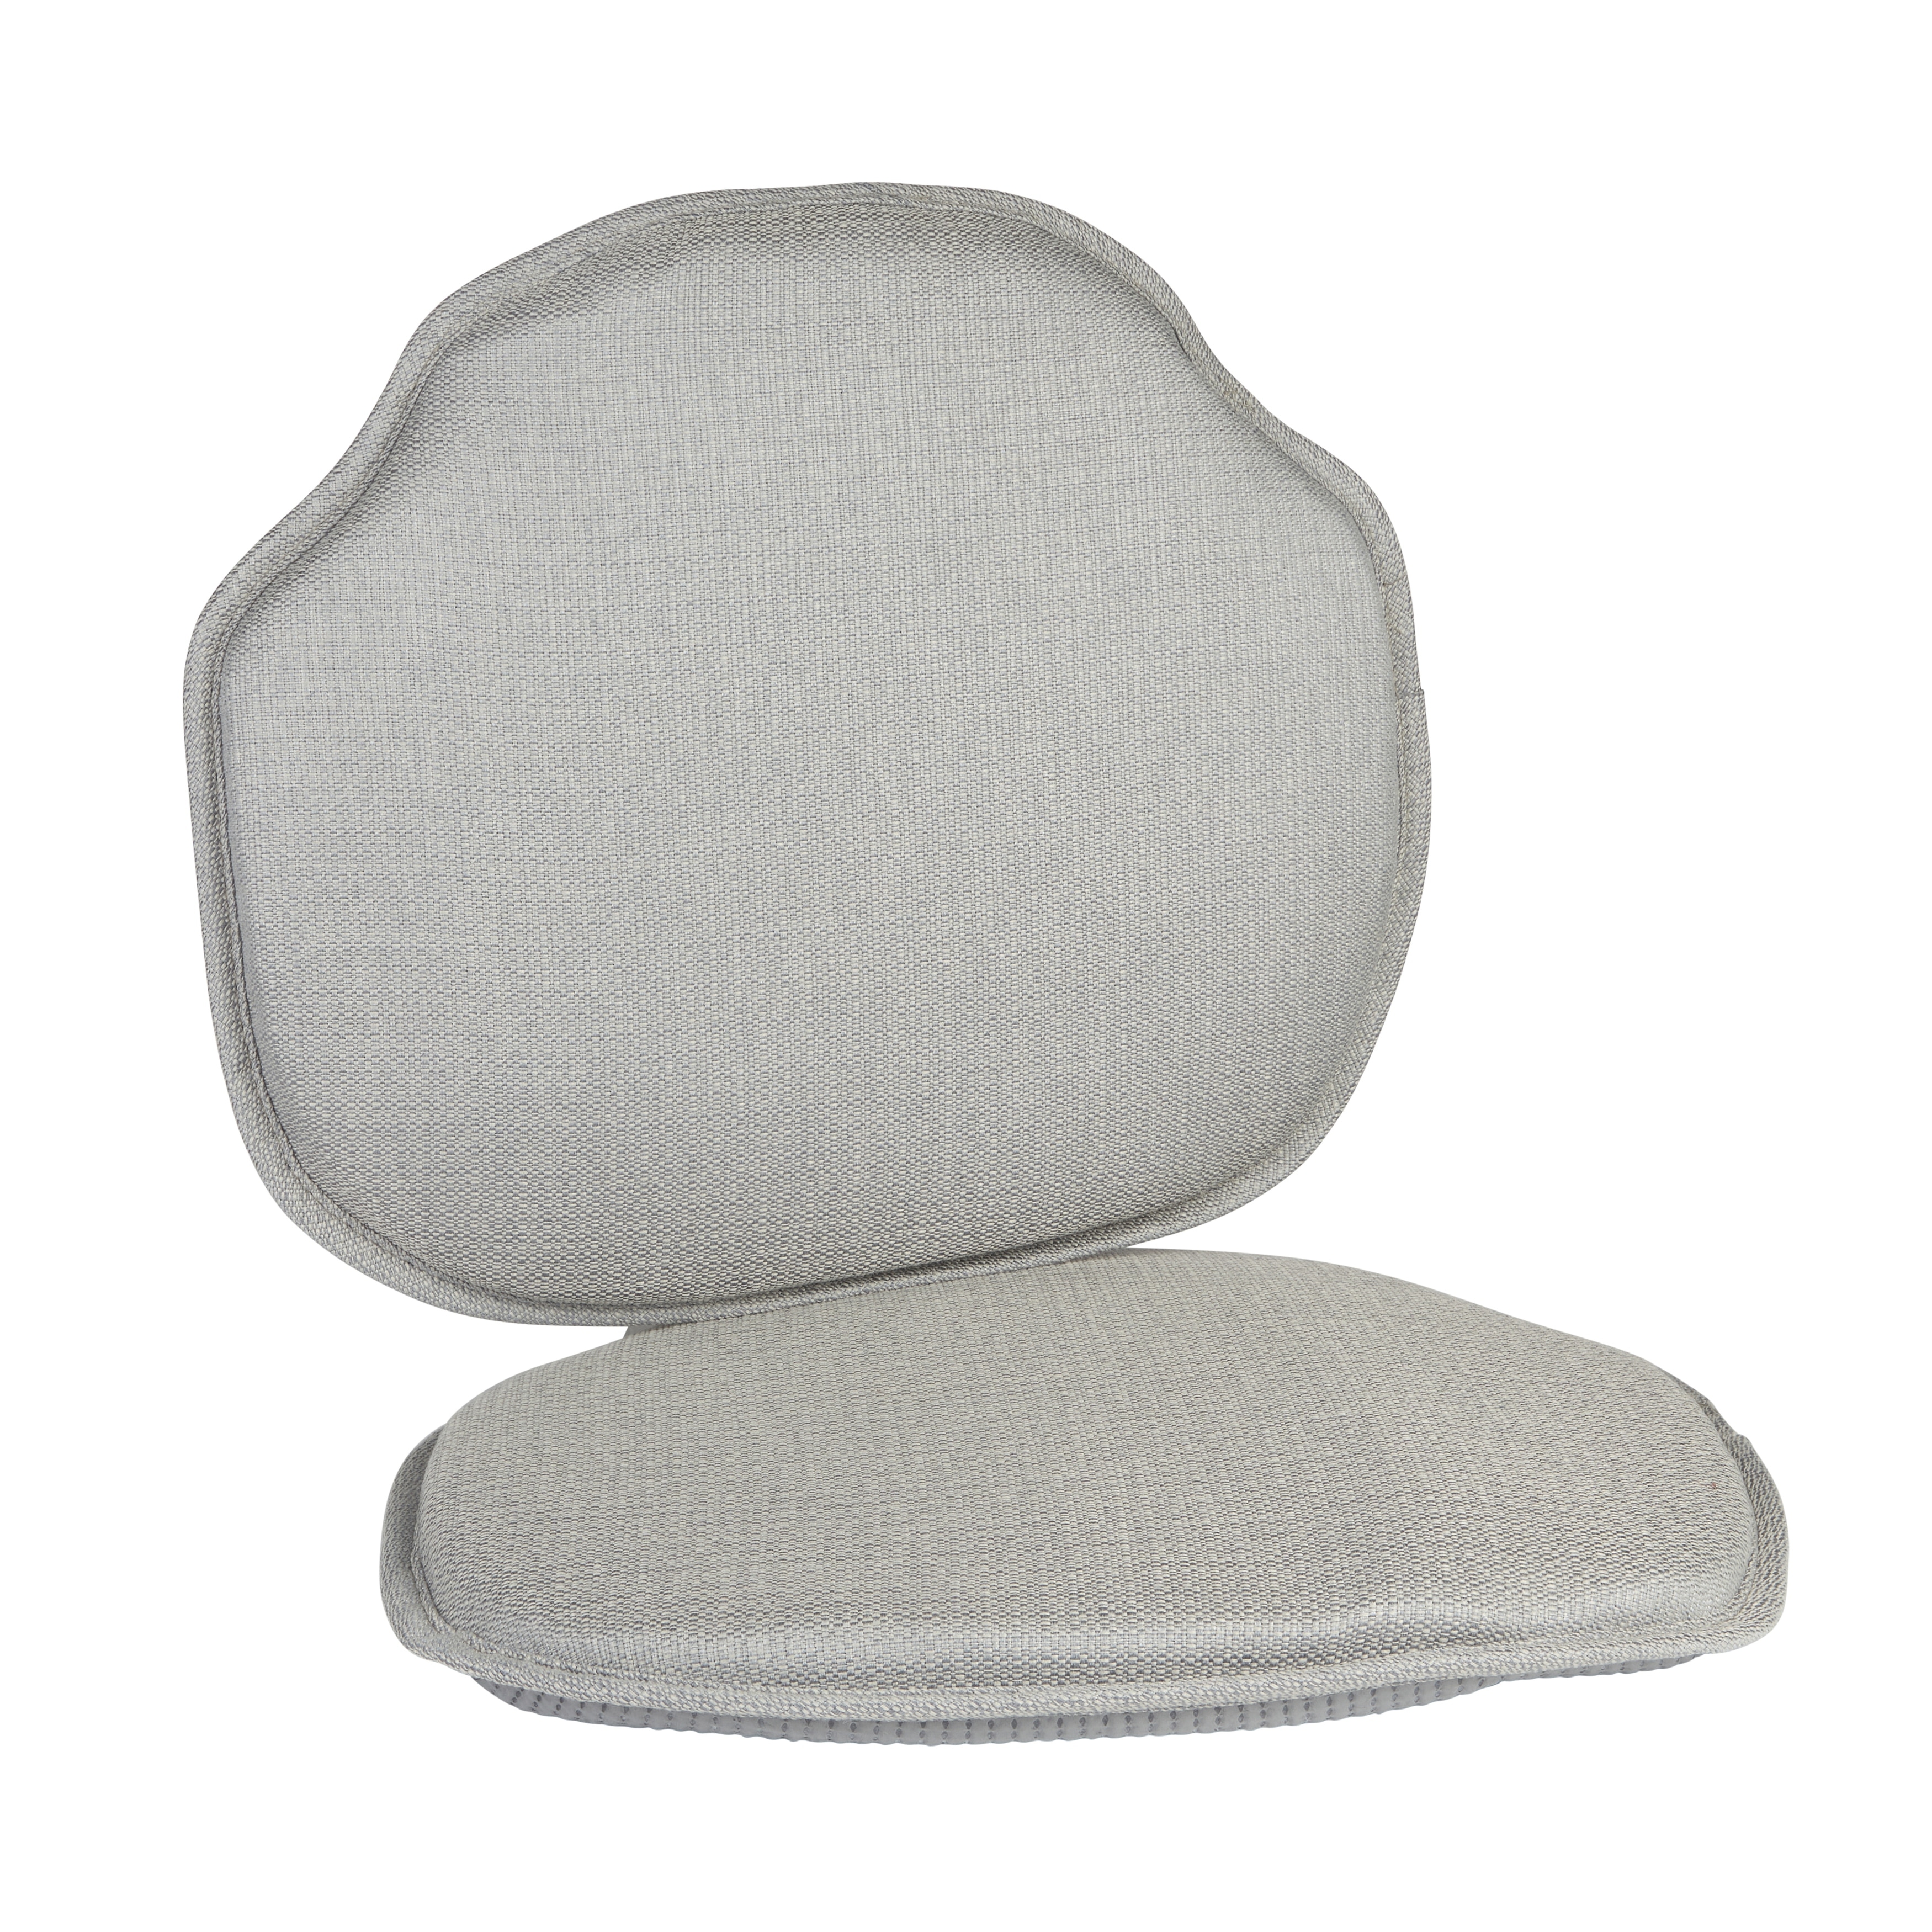 Gripper Omega Windsor Chair Cushion Set of 2 - Indigo